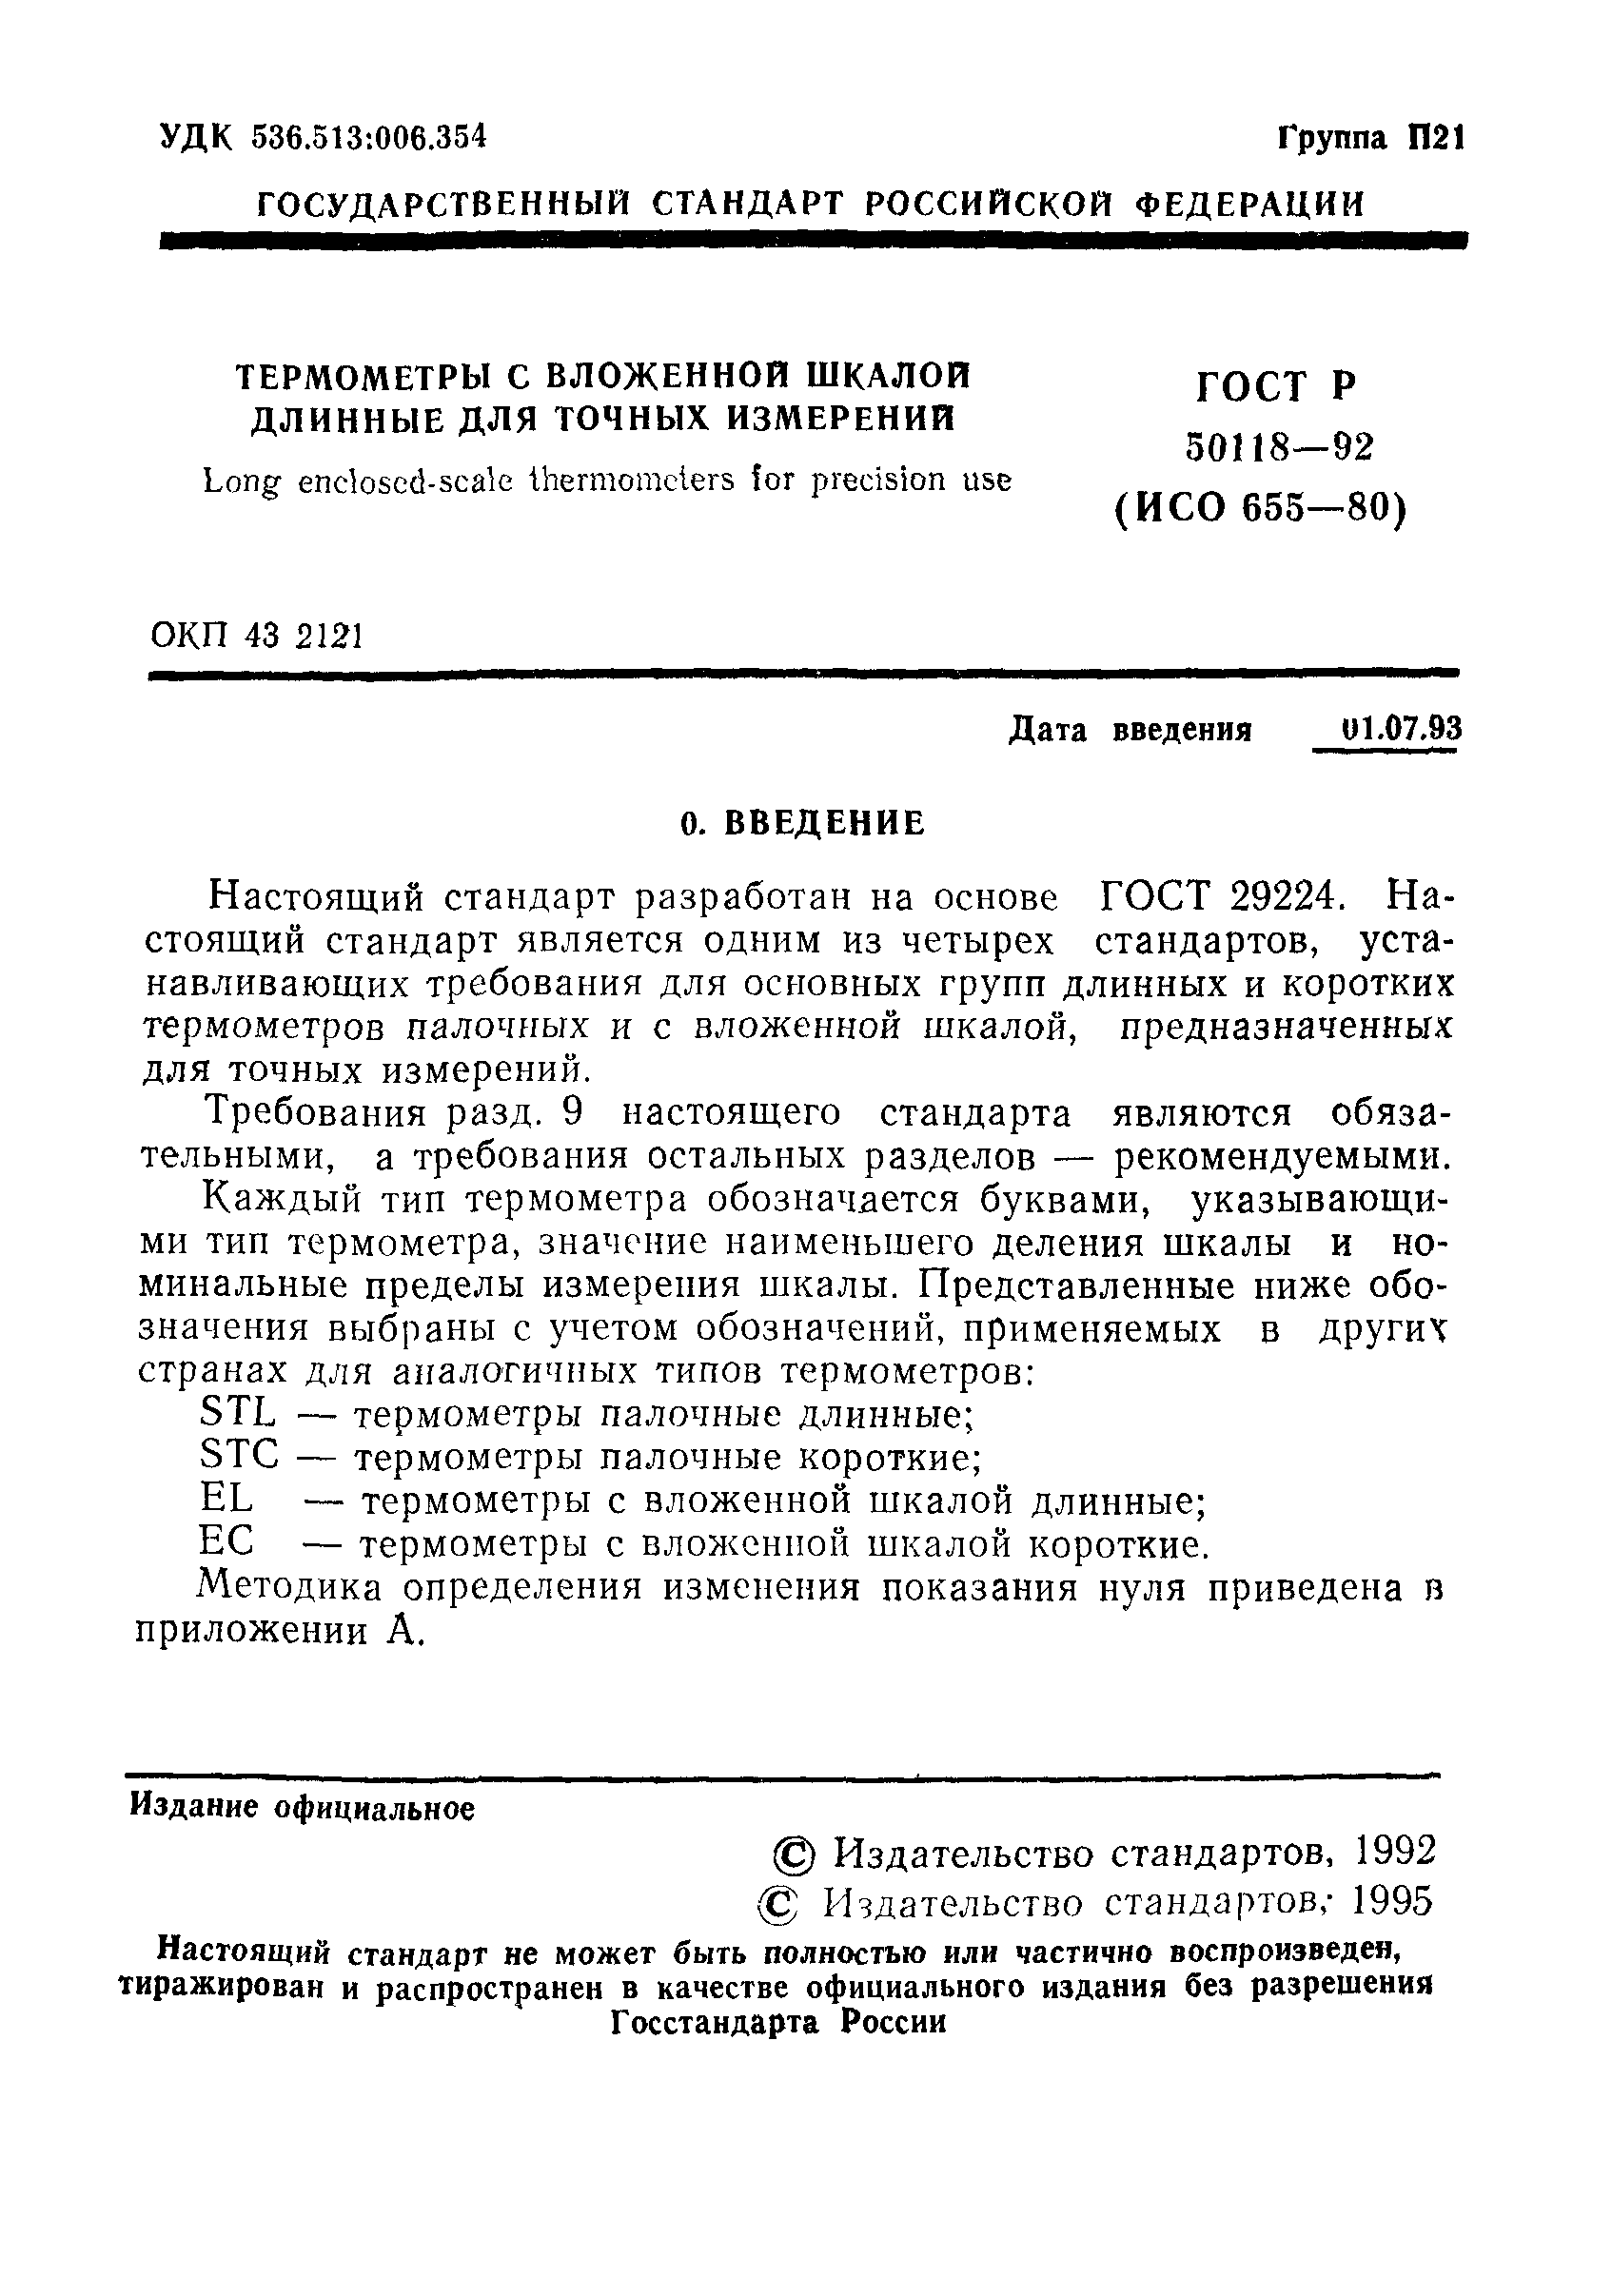 ГОСТ Р 50118-92